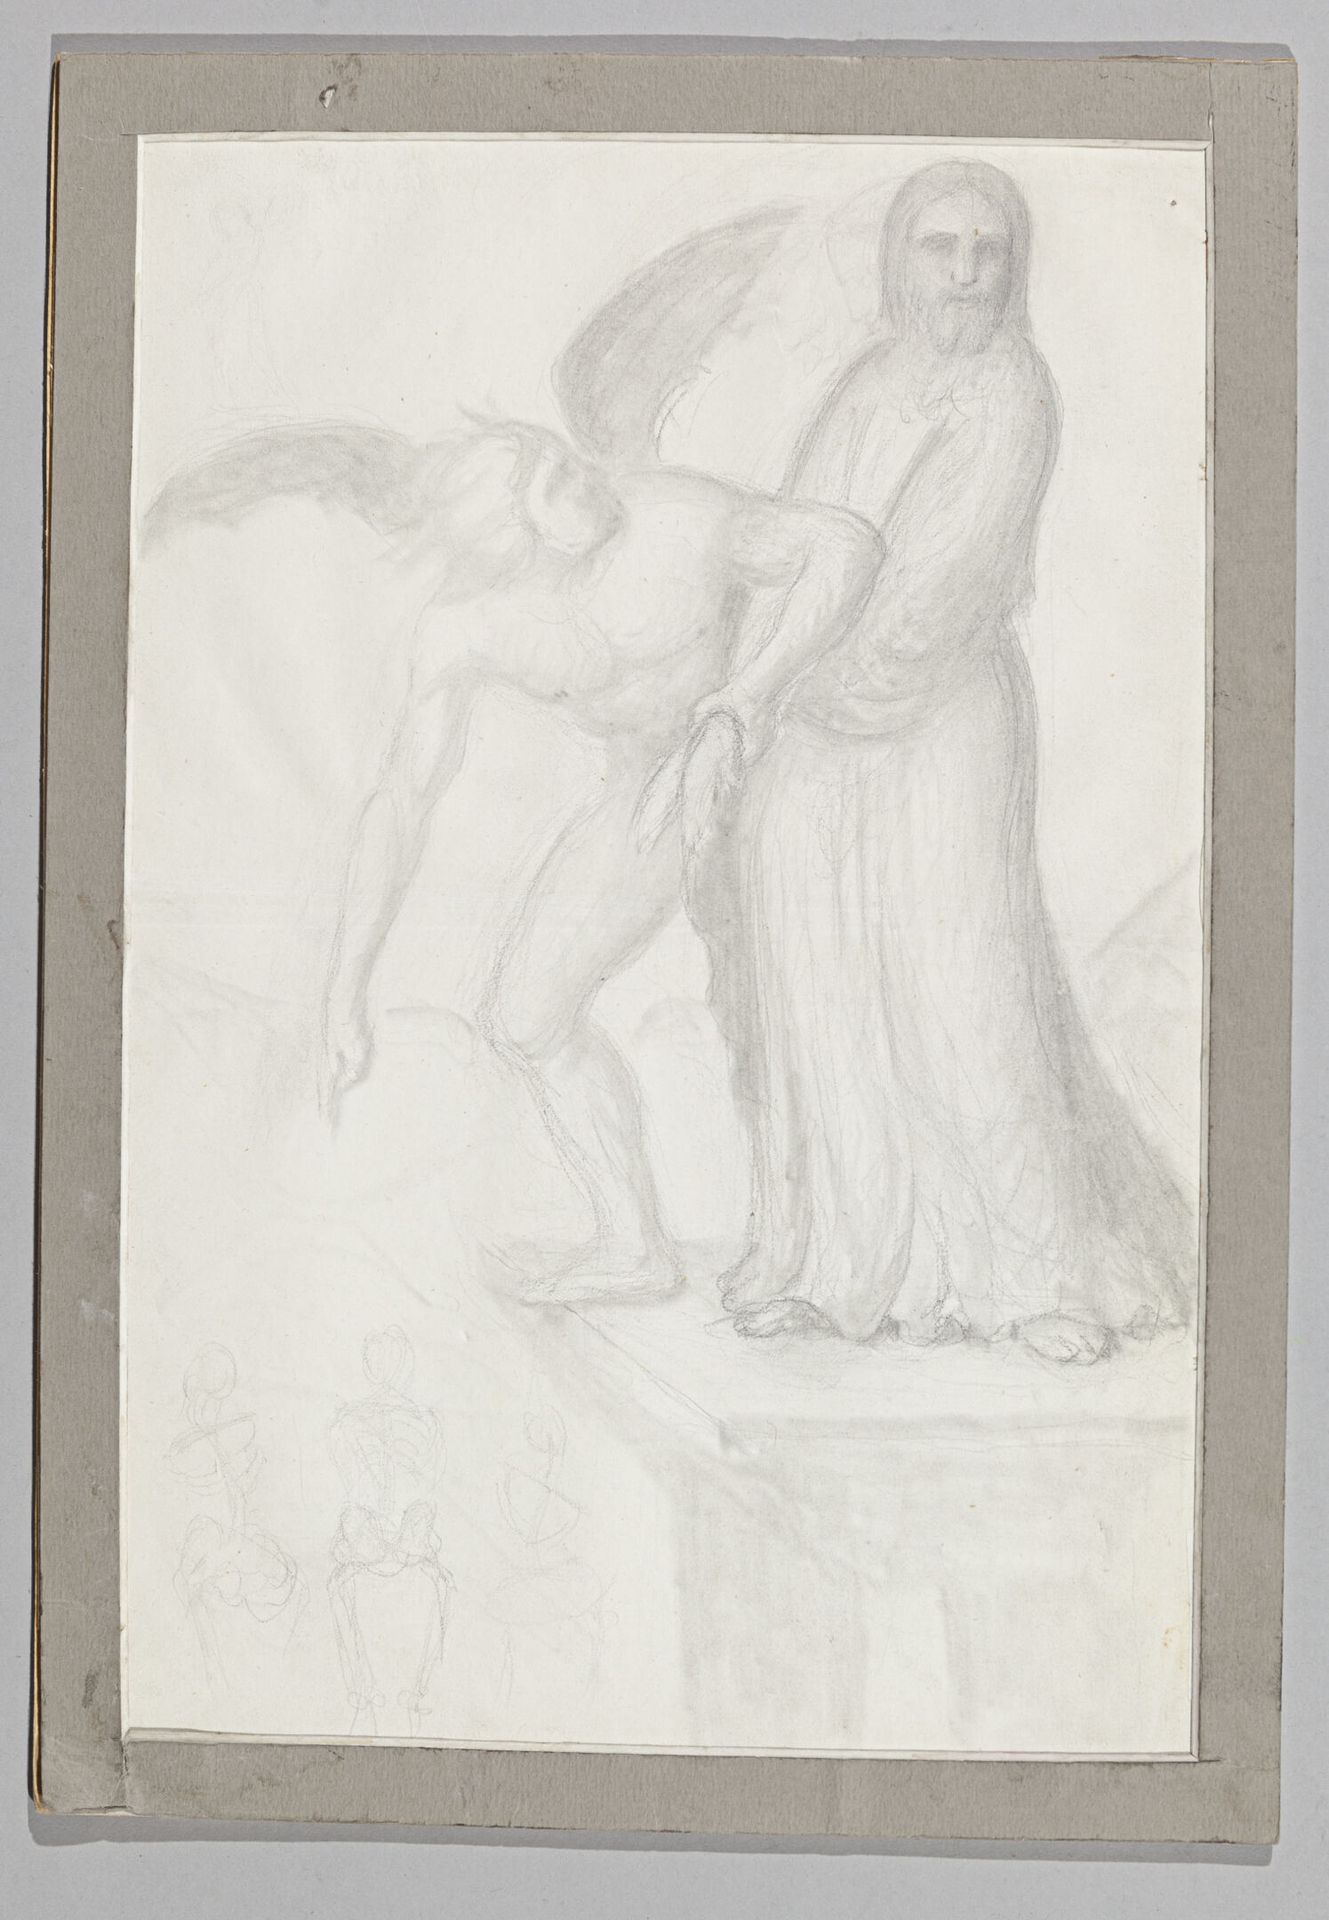 Null 伊伦妮-理查德 (1821-1906)

基督的诱惑》，约1840年

纸上铅笔。

H.35厘米 宽23.5厘米

褪色和损坏的叶片